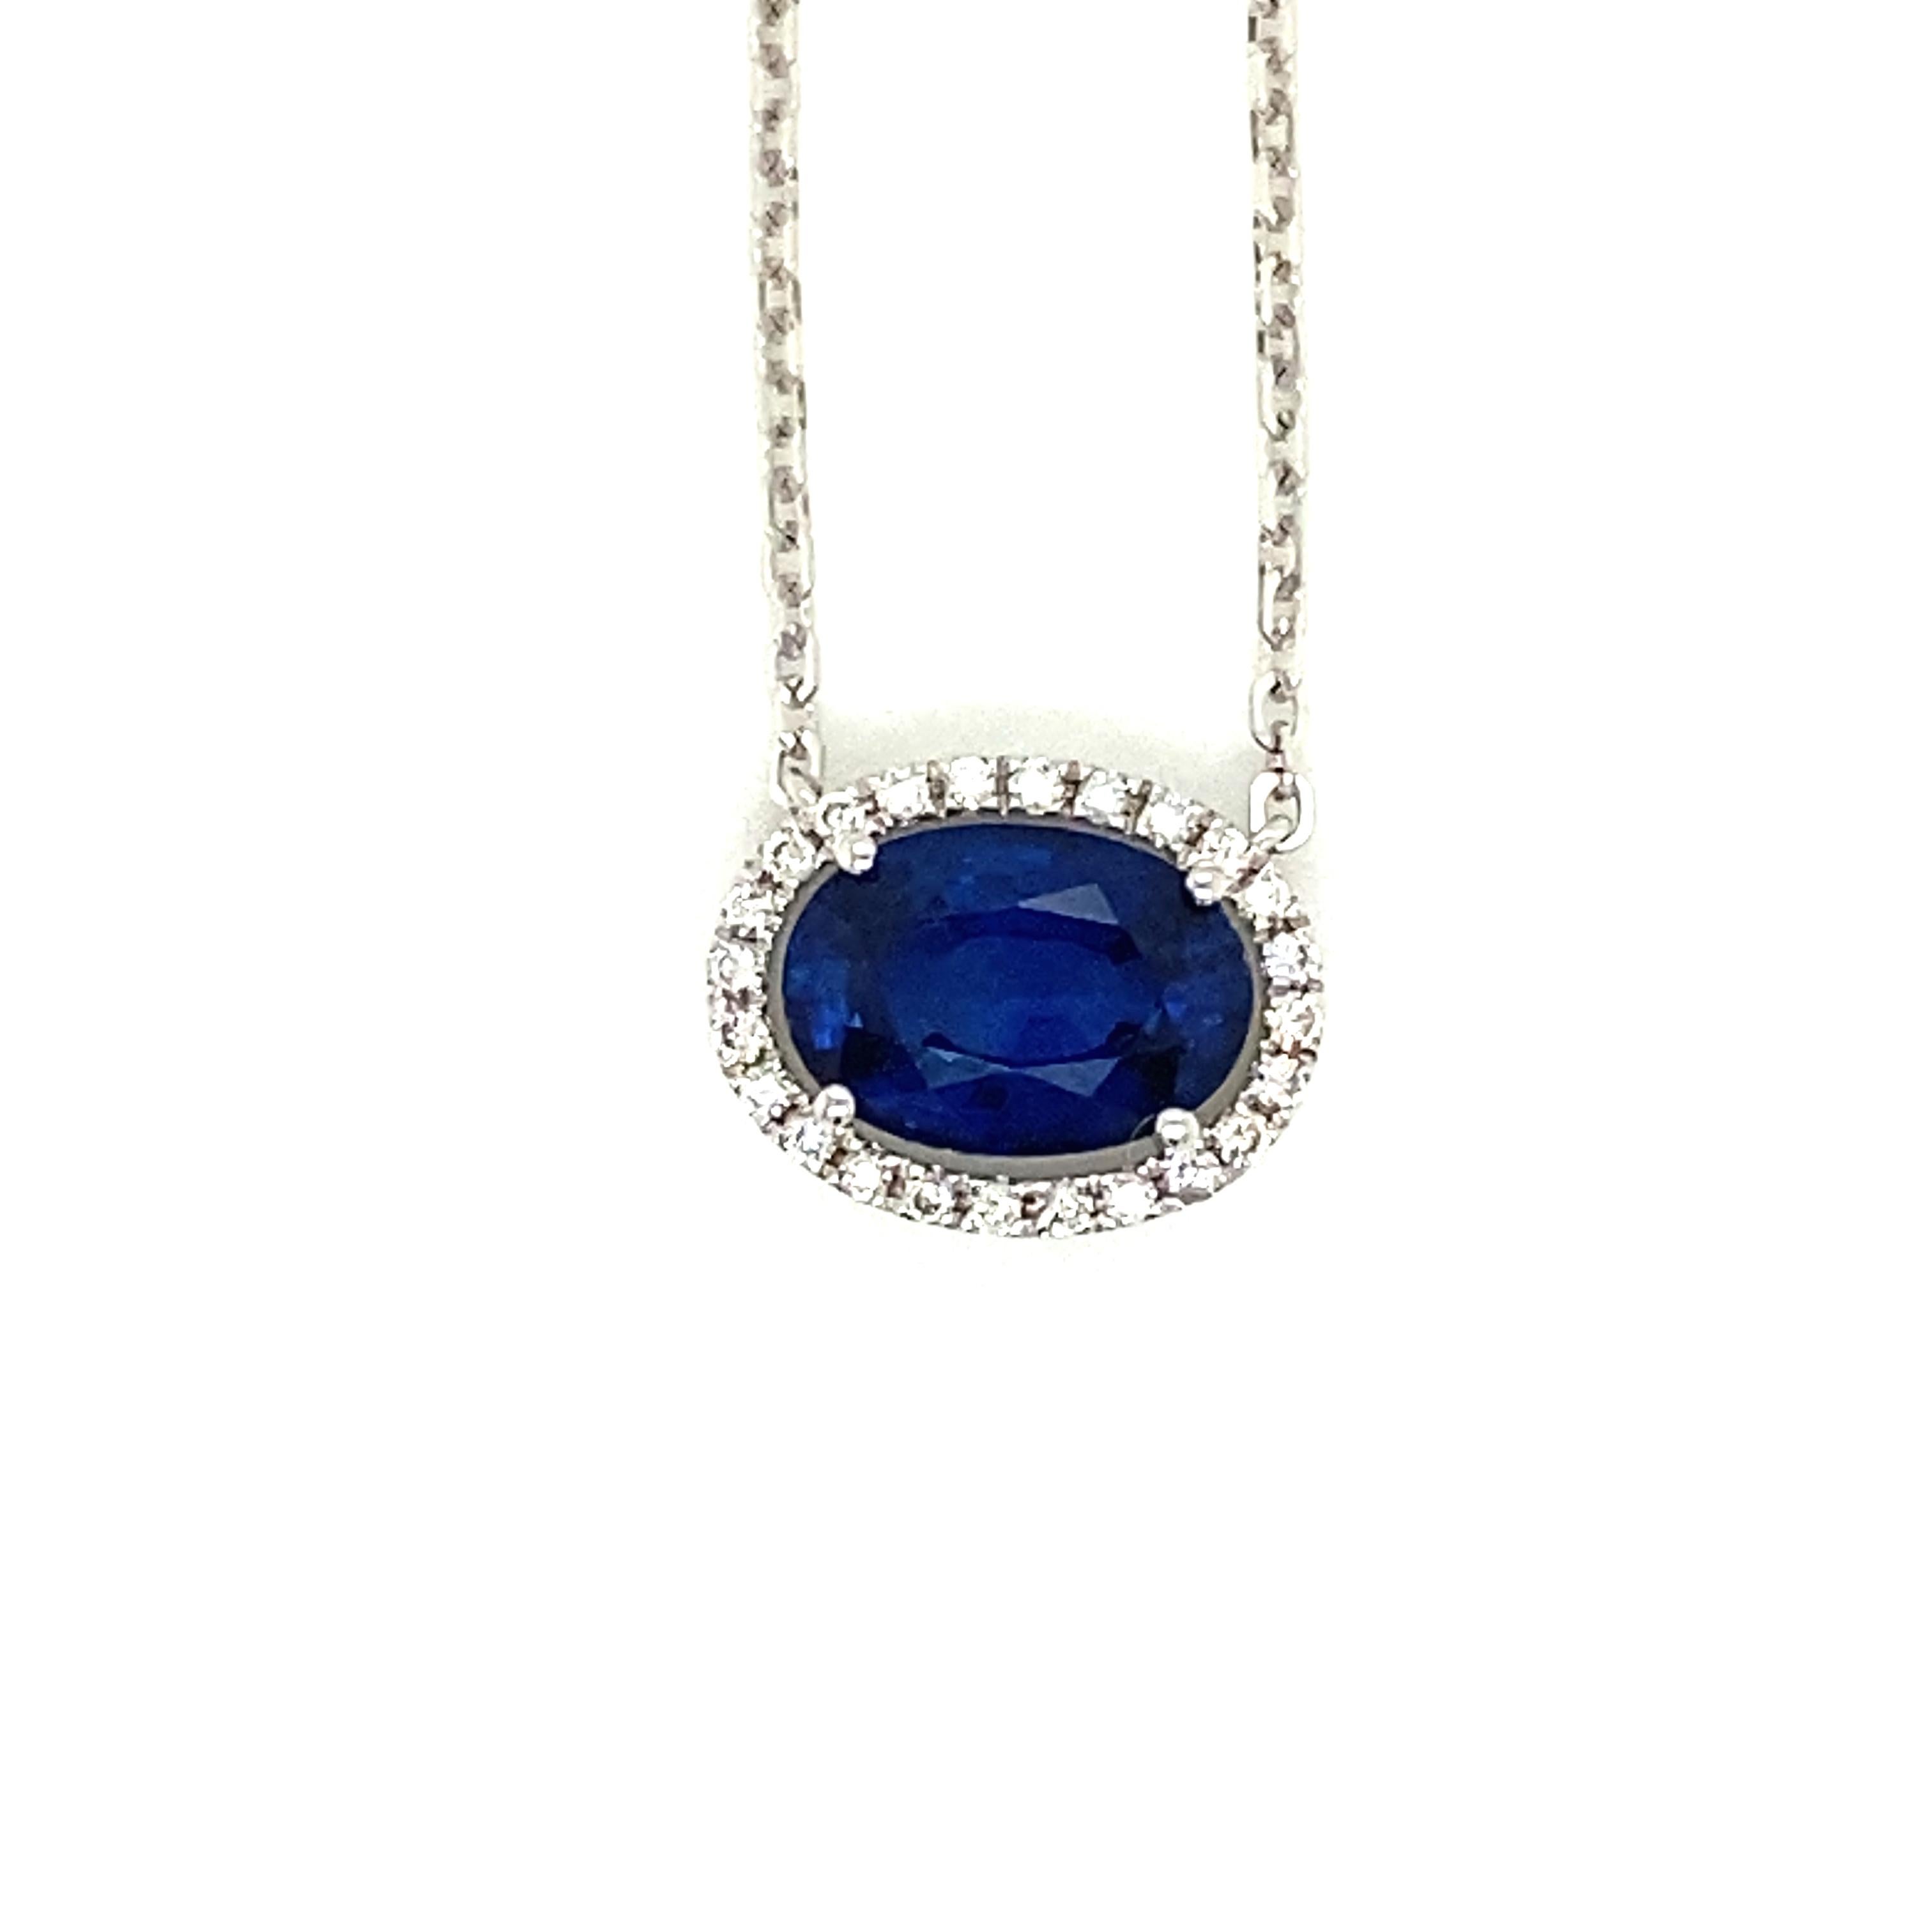 Contemporary 2.29 Carat Oval-Cut Vivid Blue Sapphire and White Diamond Pendant Necklace For Sale